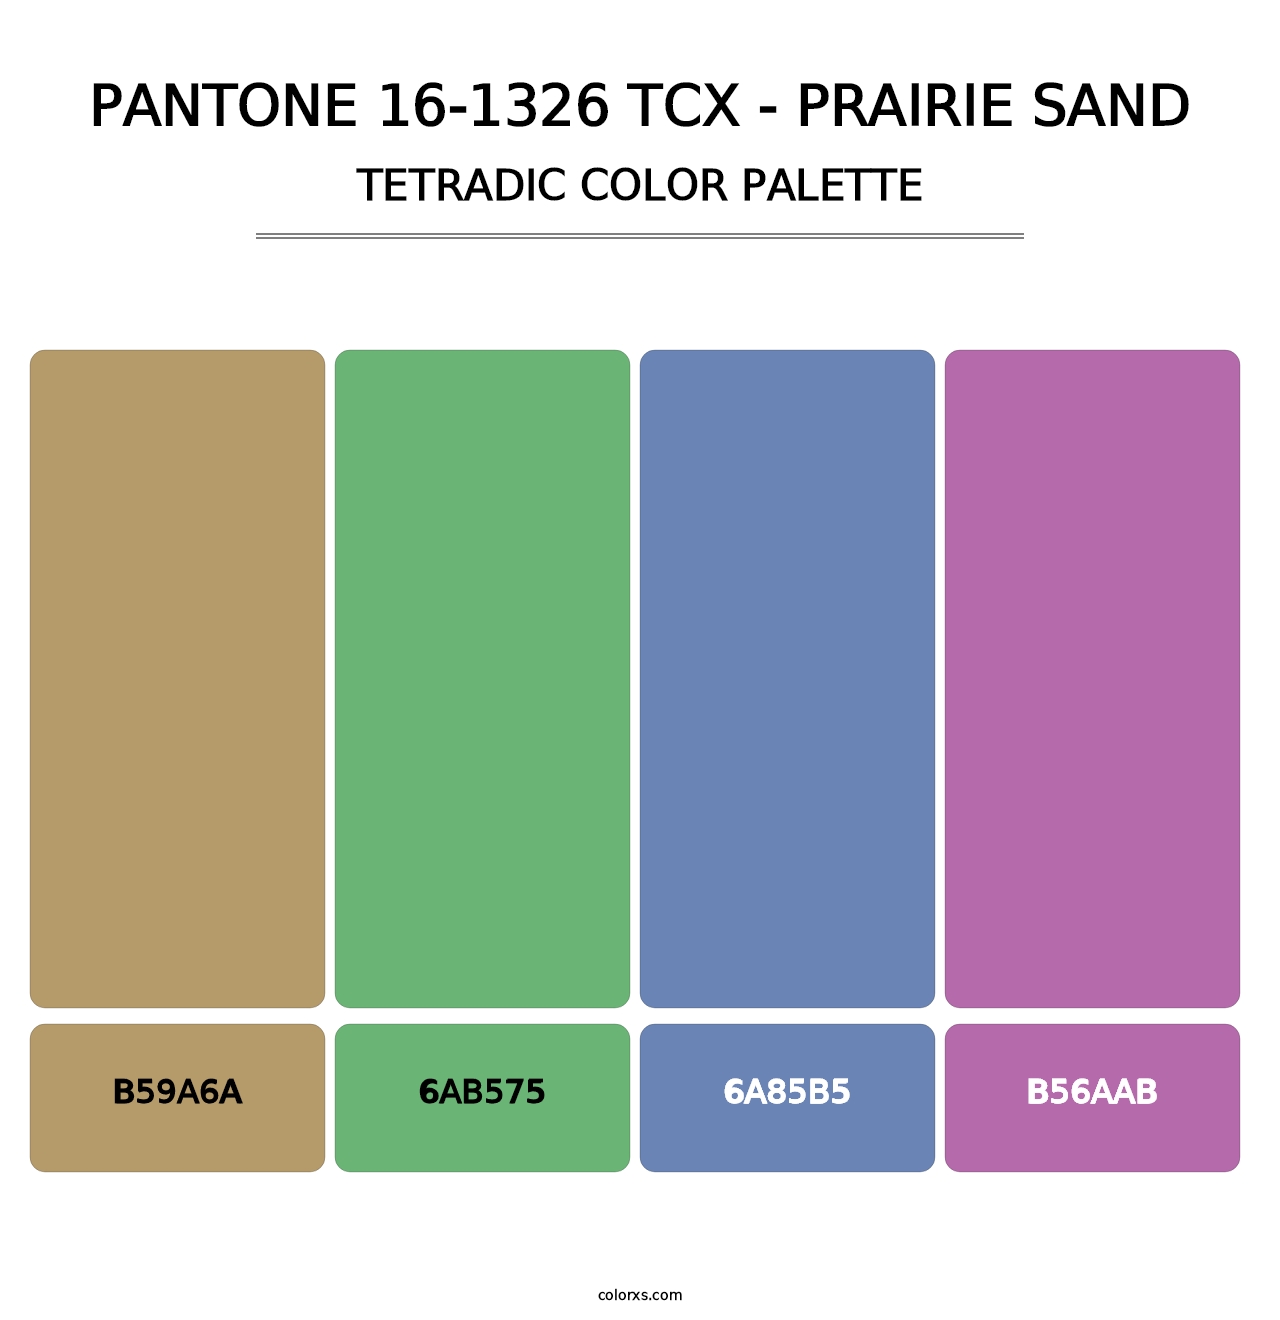 PANTONE 16-1326 TCX - Prairie Sand - Tetradic Color Palette